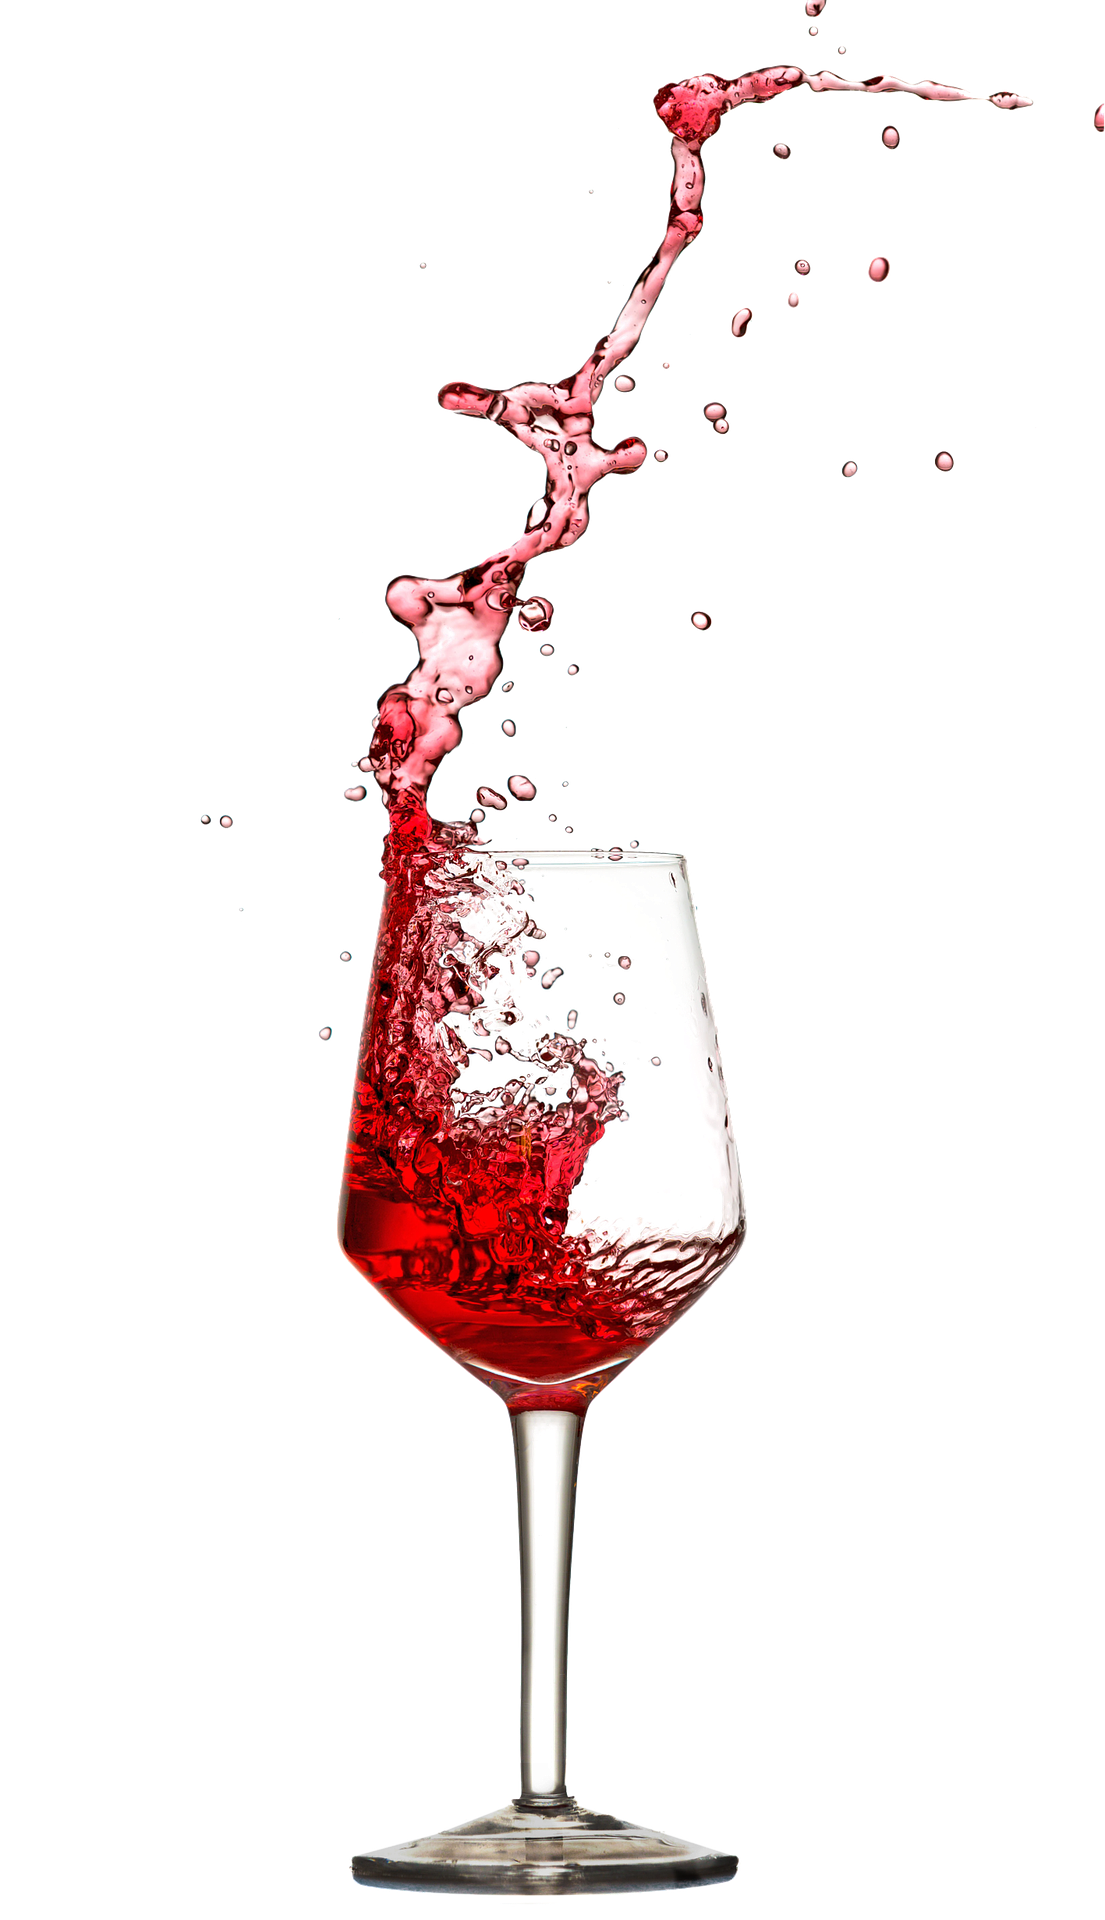 Dynamic Red Wine Splash